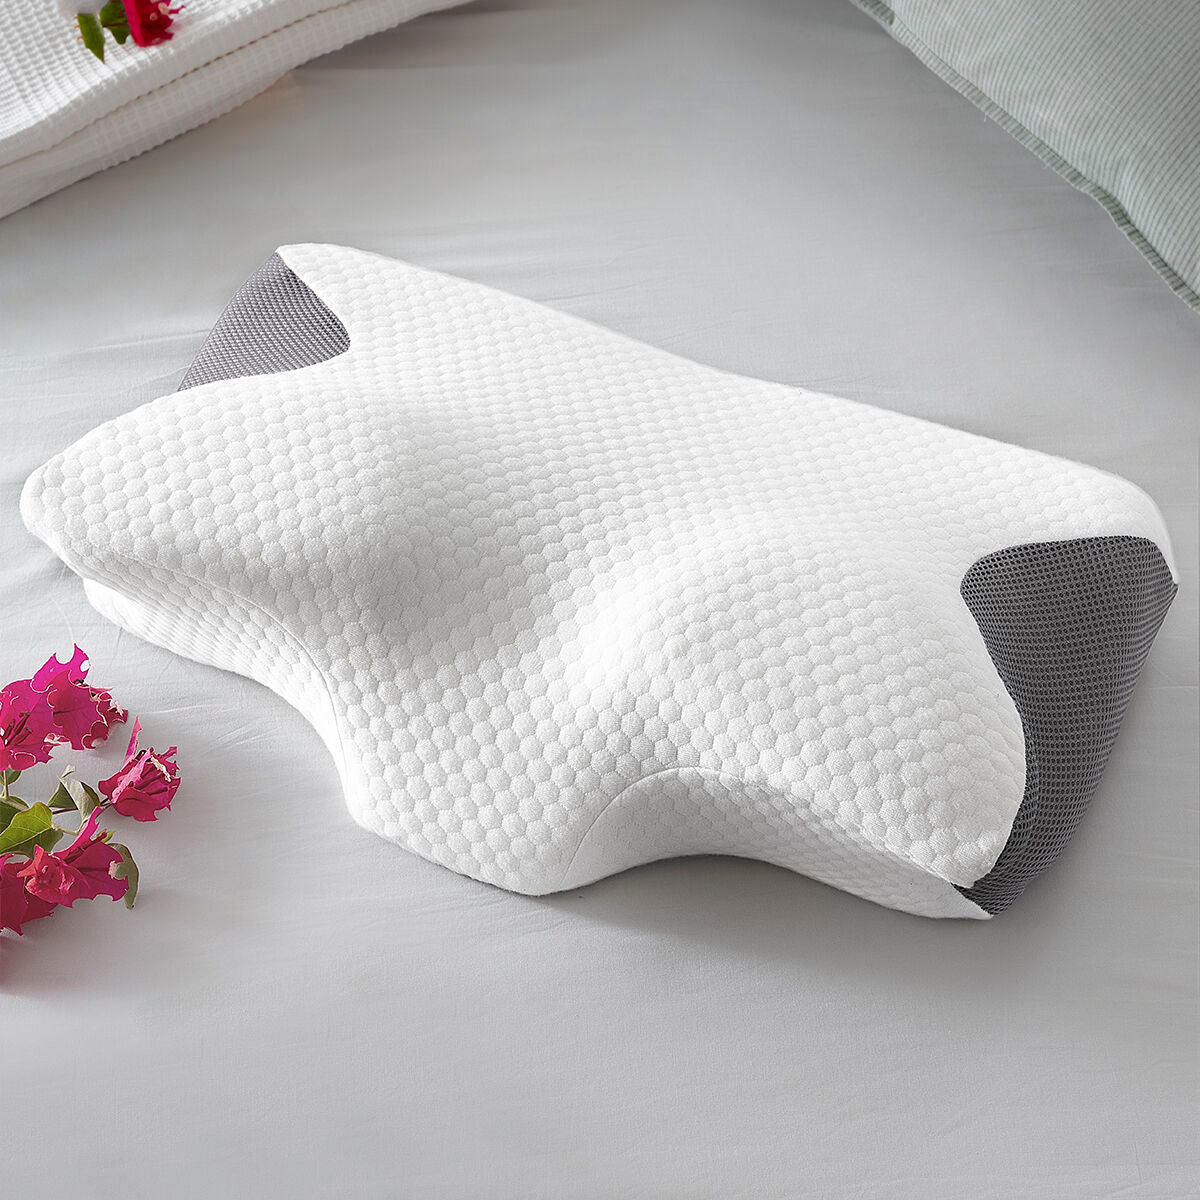 Neck pillow with ergonomic contours